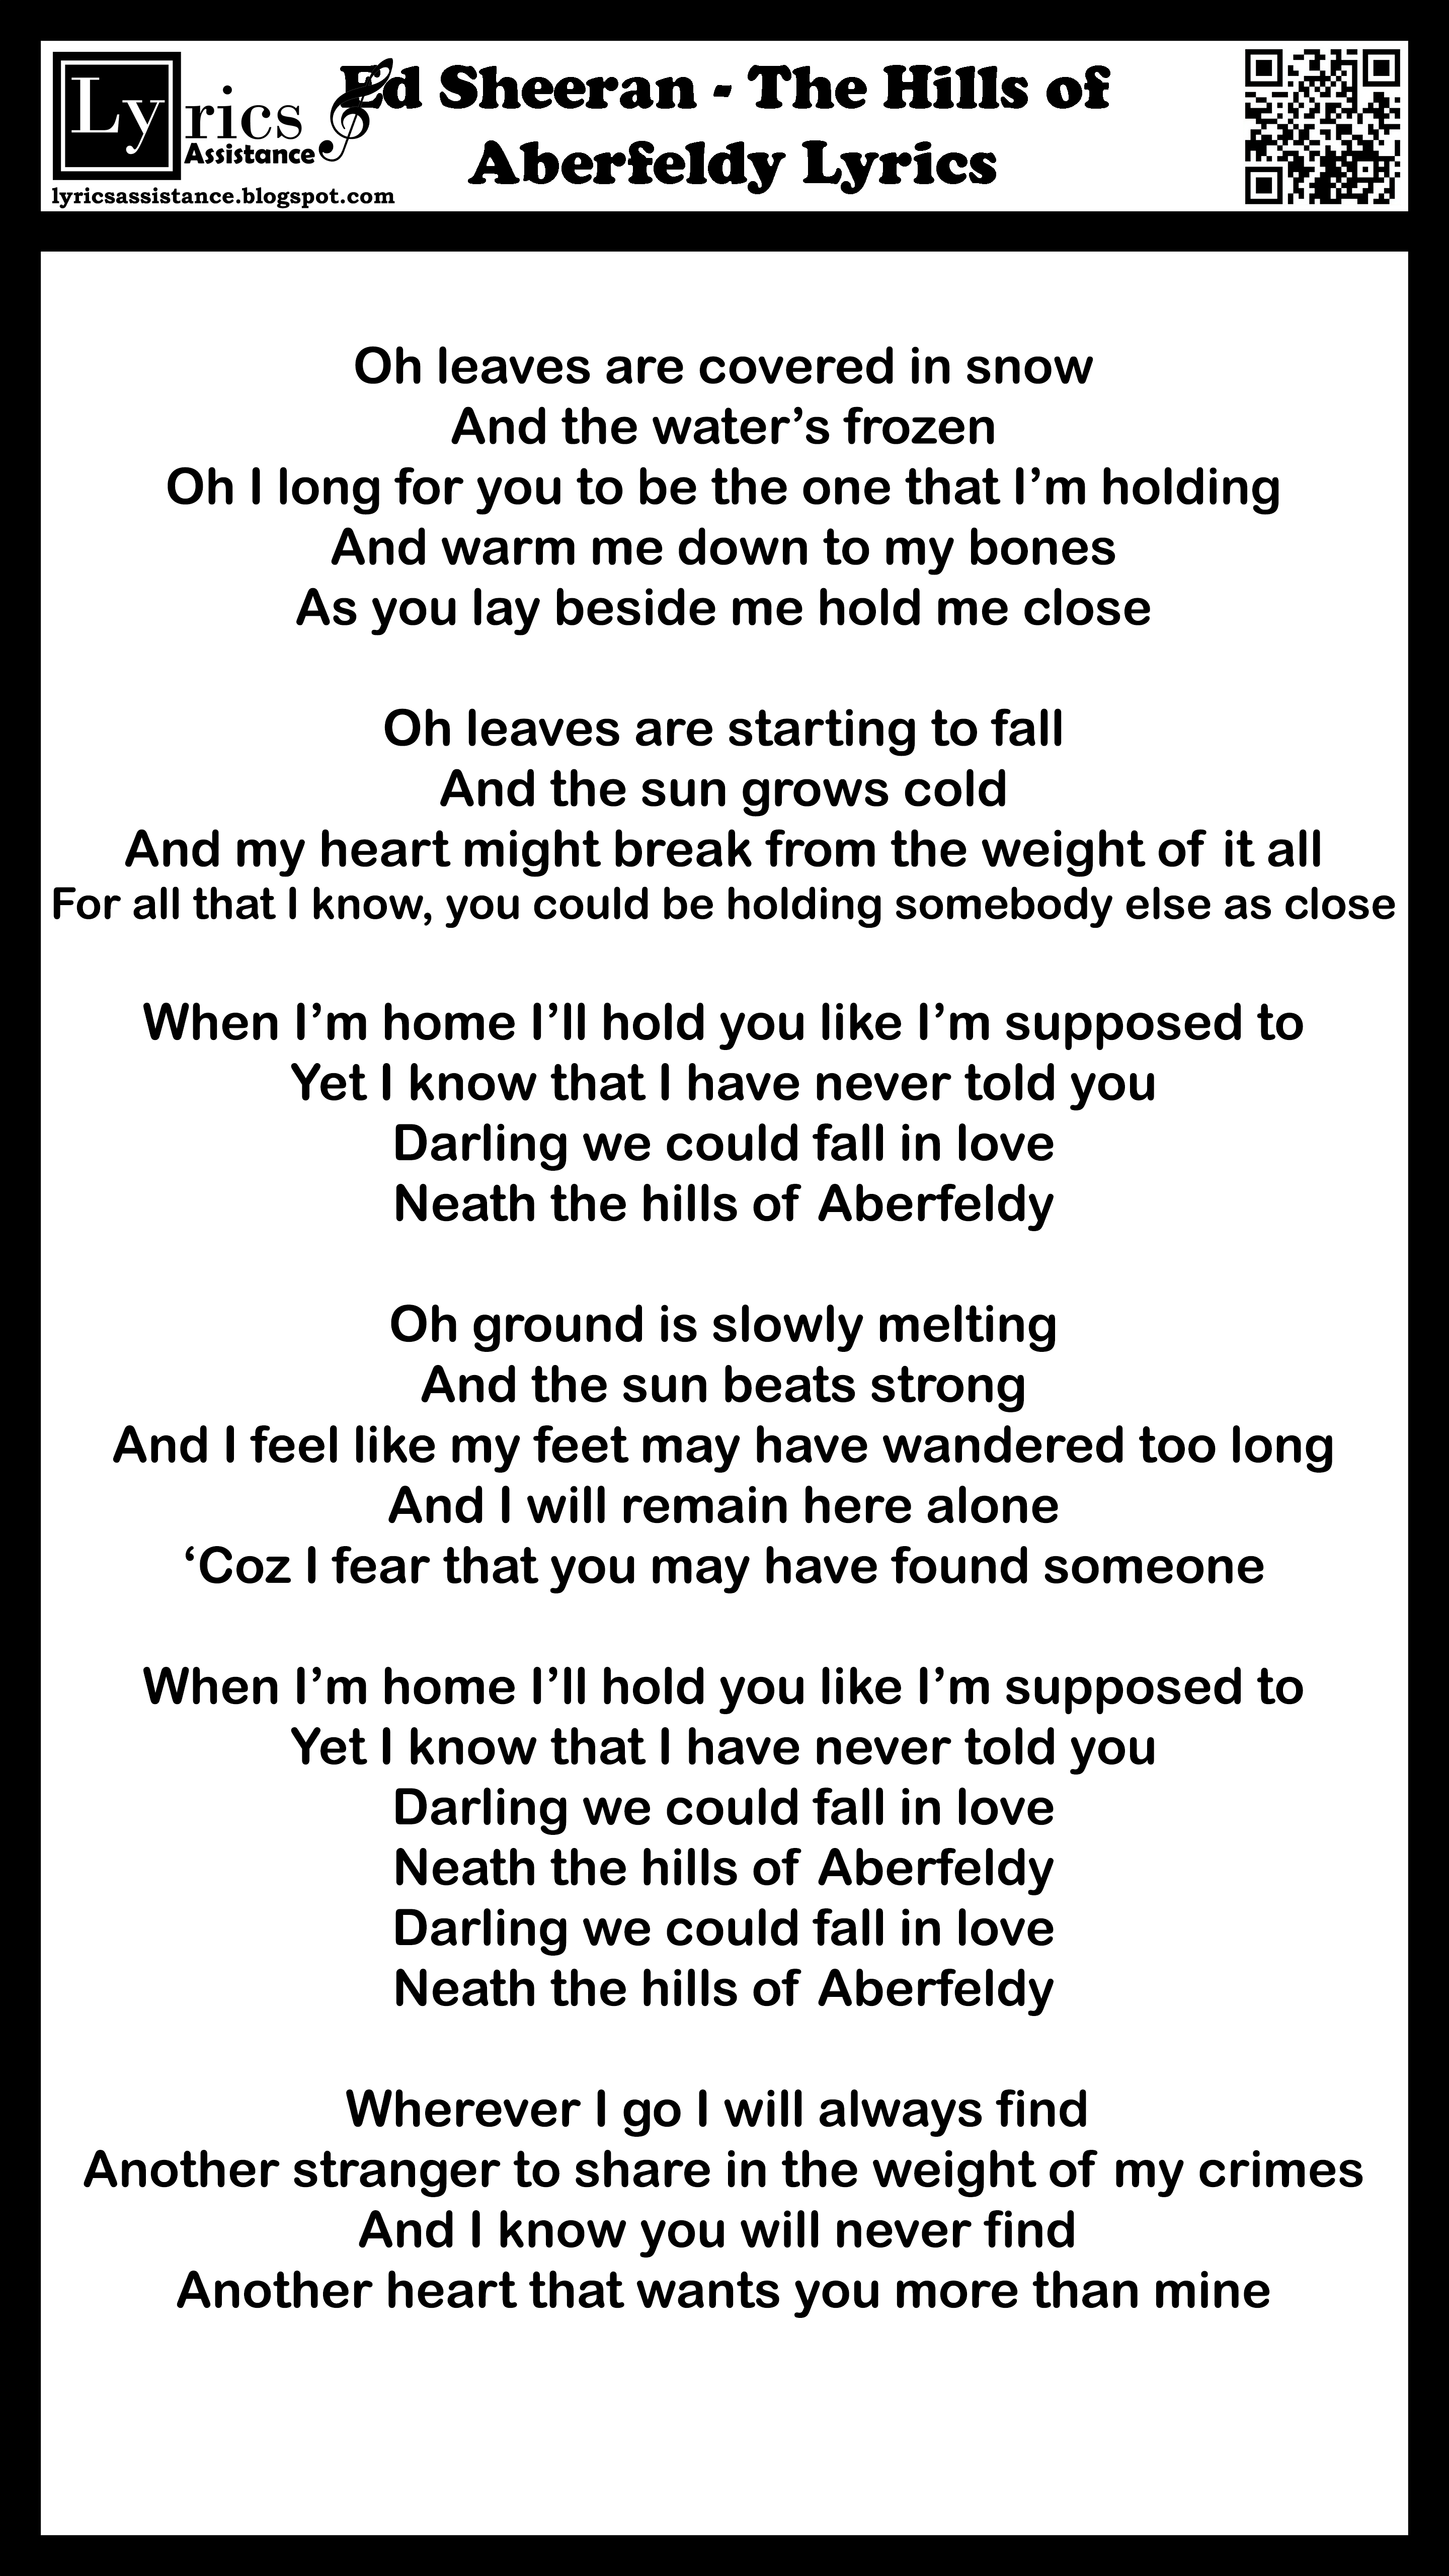 ed sheeran - the hills of aberfeldy lyrics